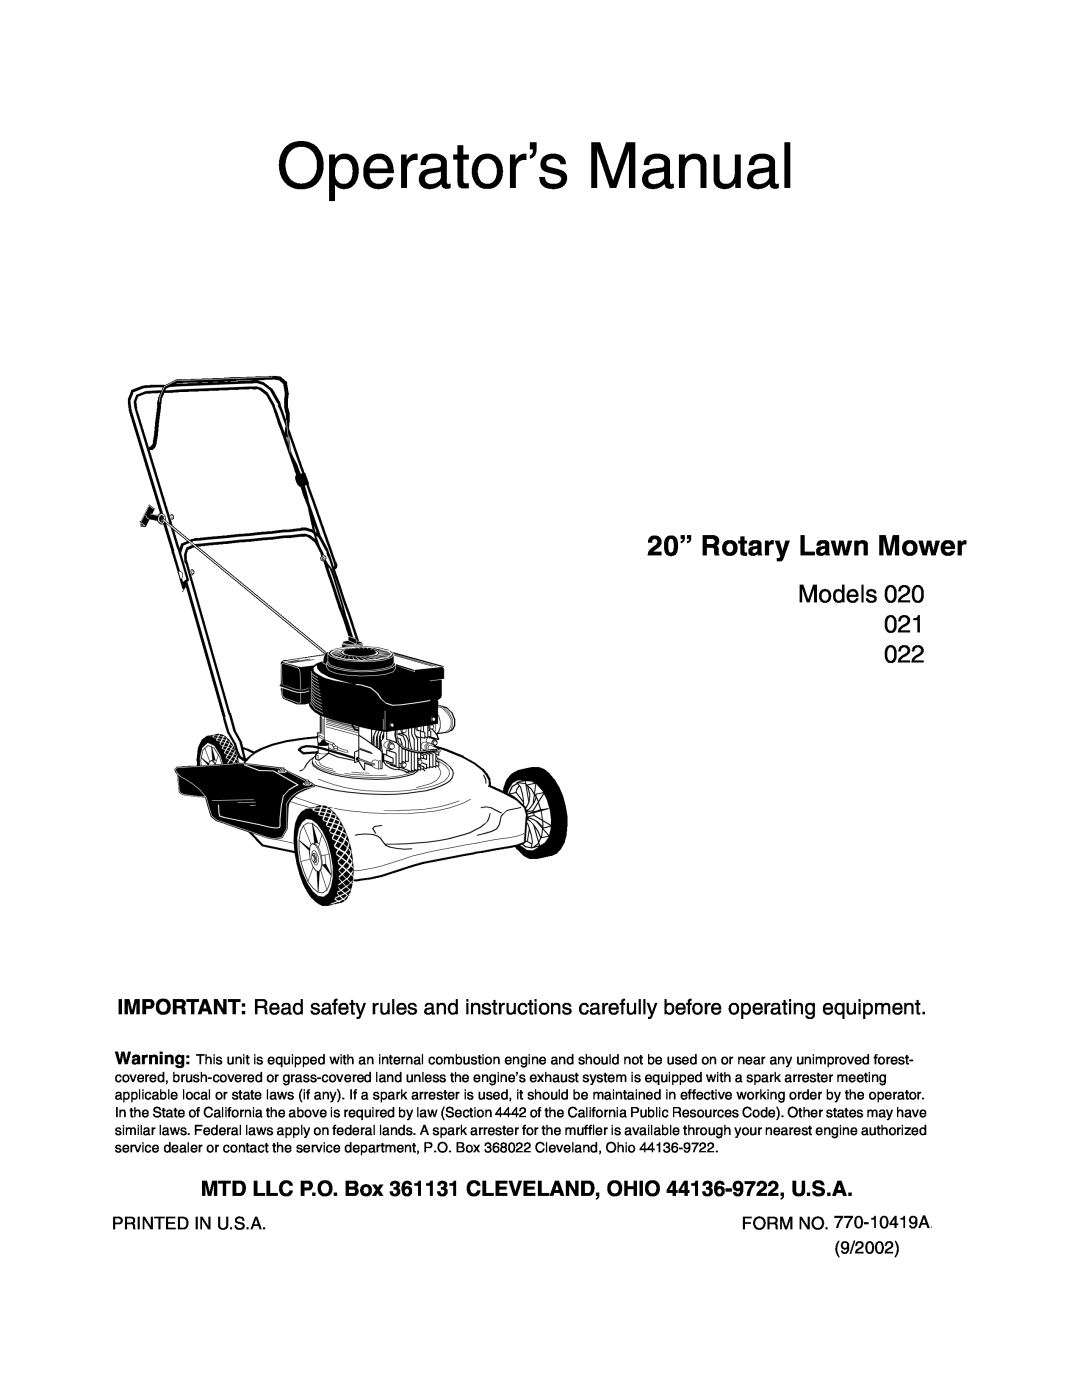 MTD 022 manual MTD LLC P.O. Box 361131 CLEVELAND, OHIO 44136-9722, U.S.A, Operator’s Manual, 20” Rotary Lawn Mower, Models 